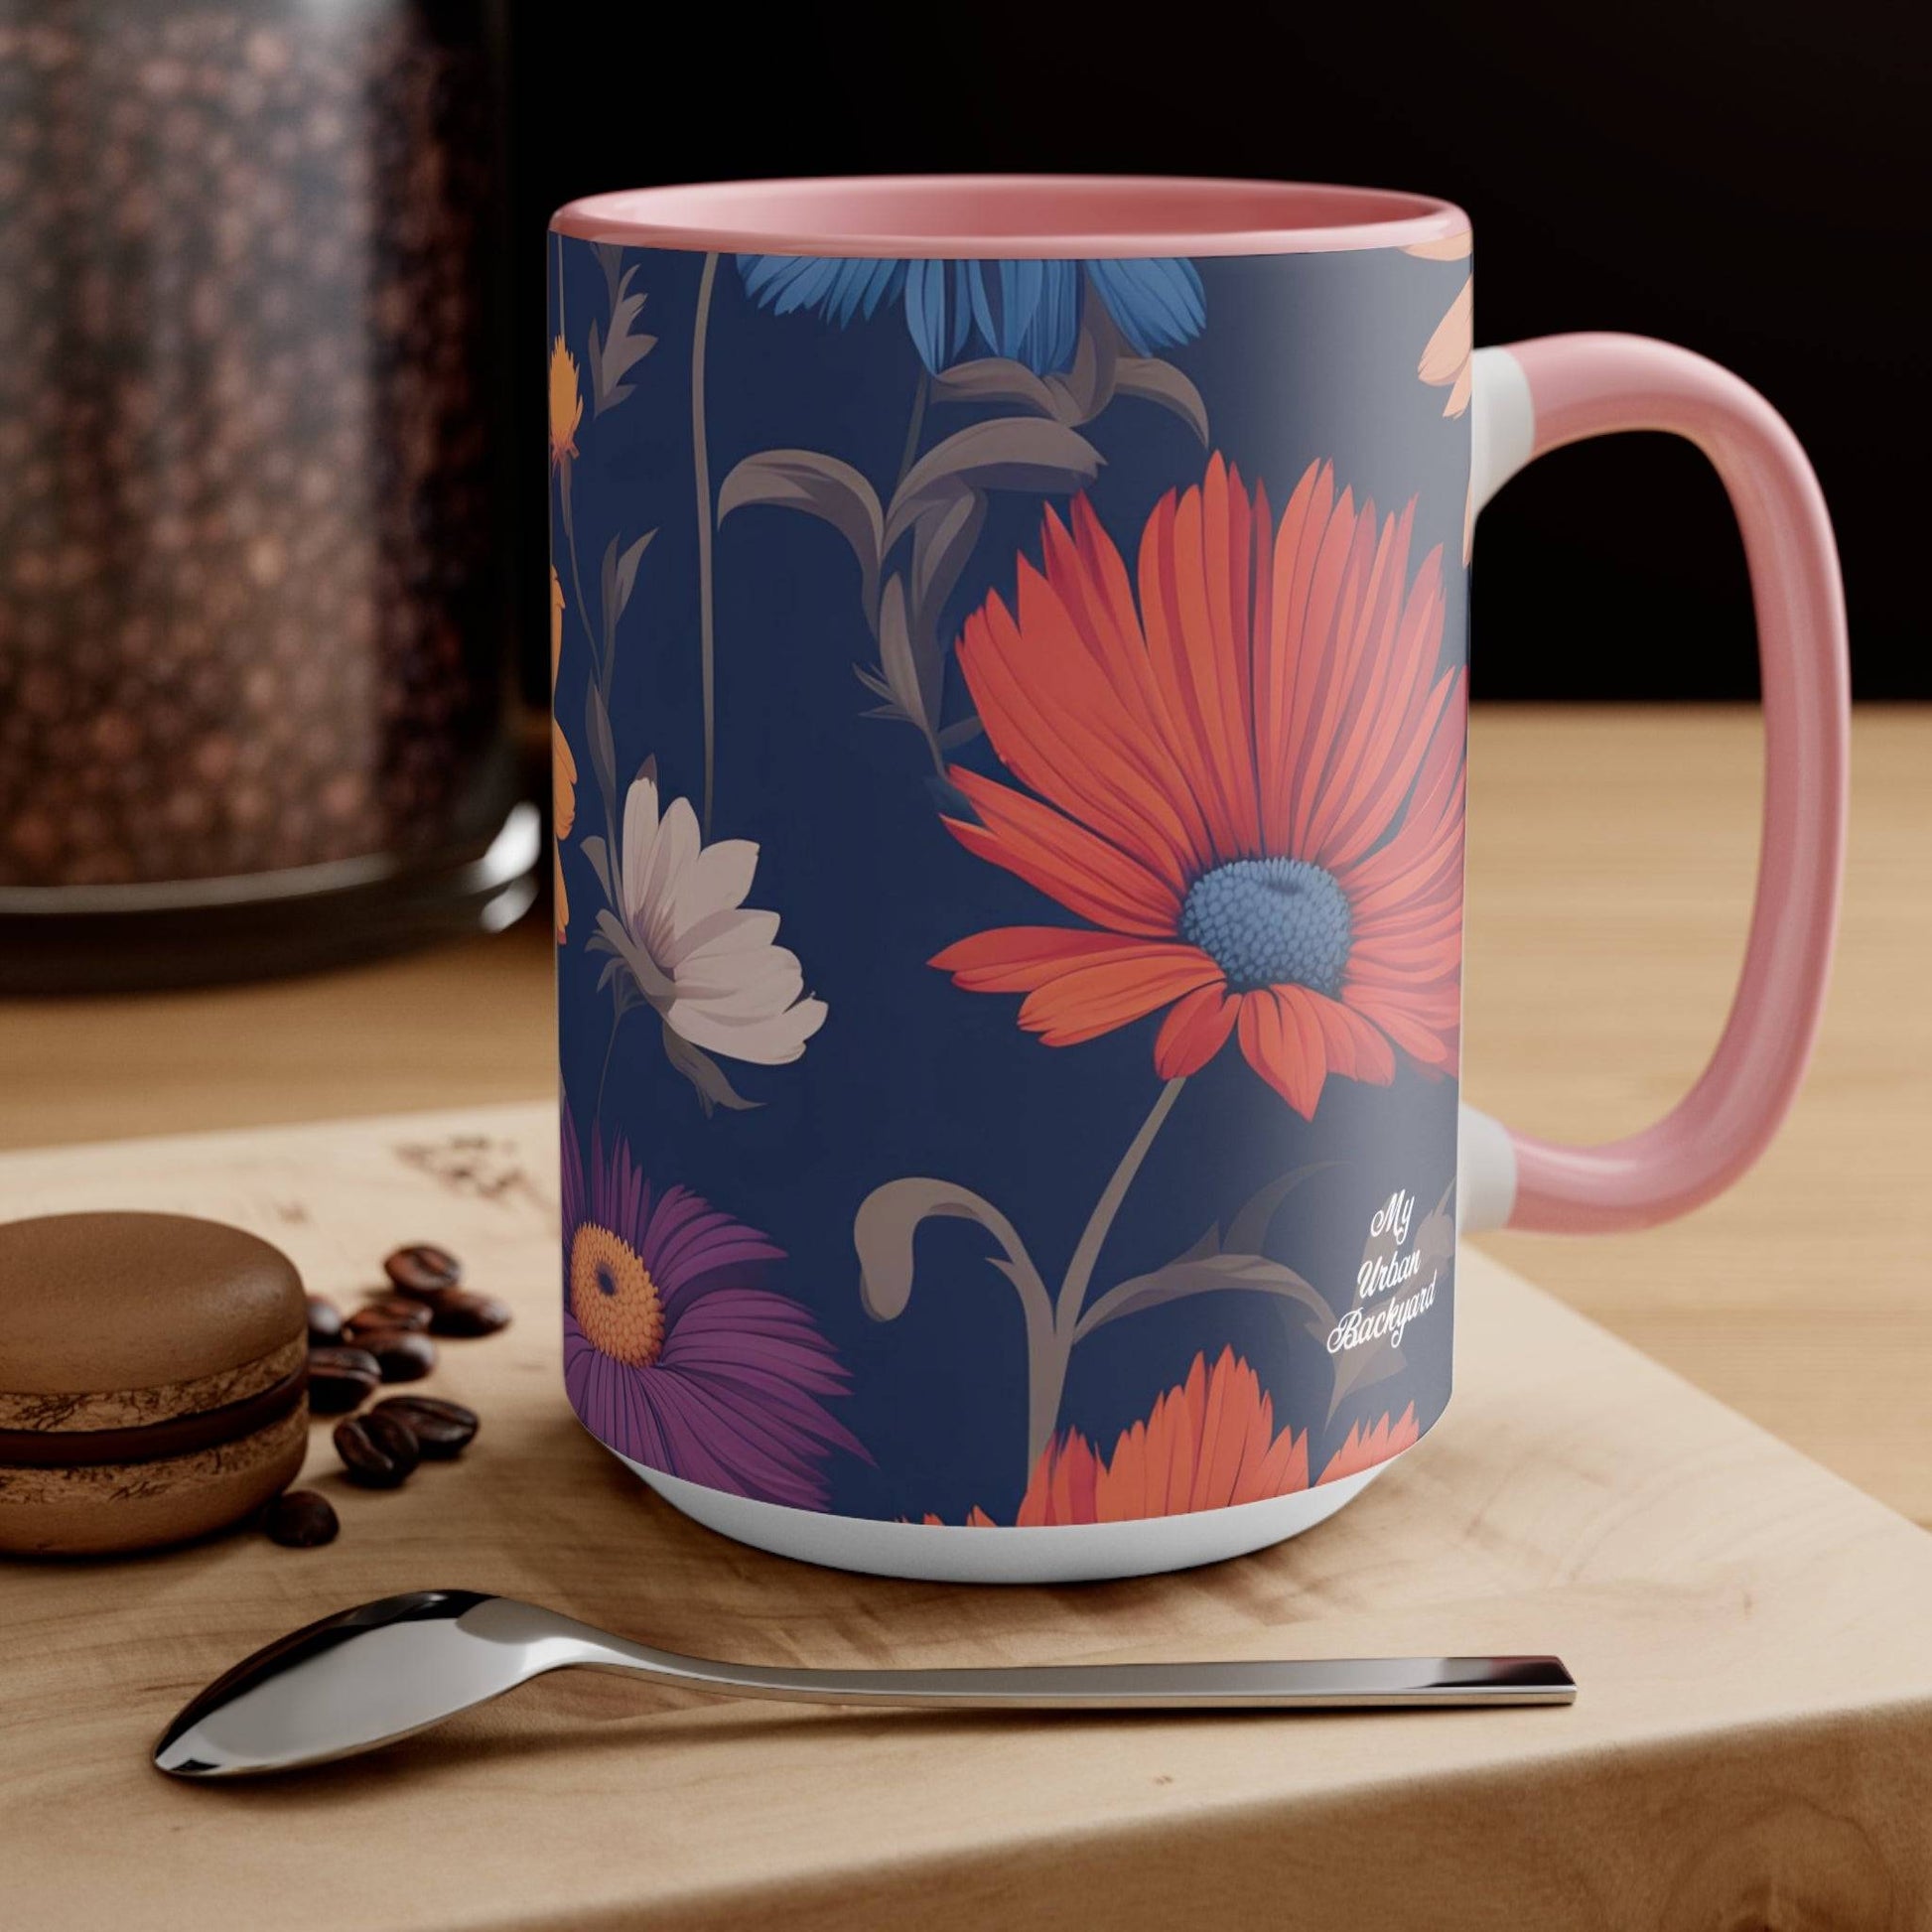 Ceramic Mug for Coffee, Tea, Hot Cocoa. Home/Office, Fun Wildflowers